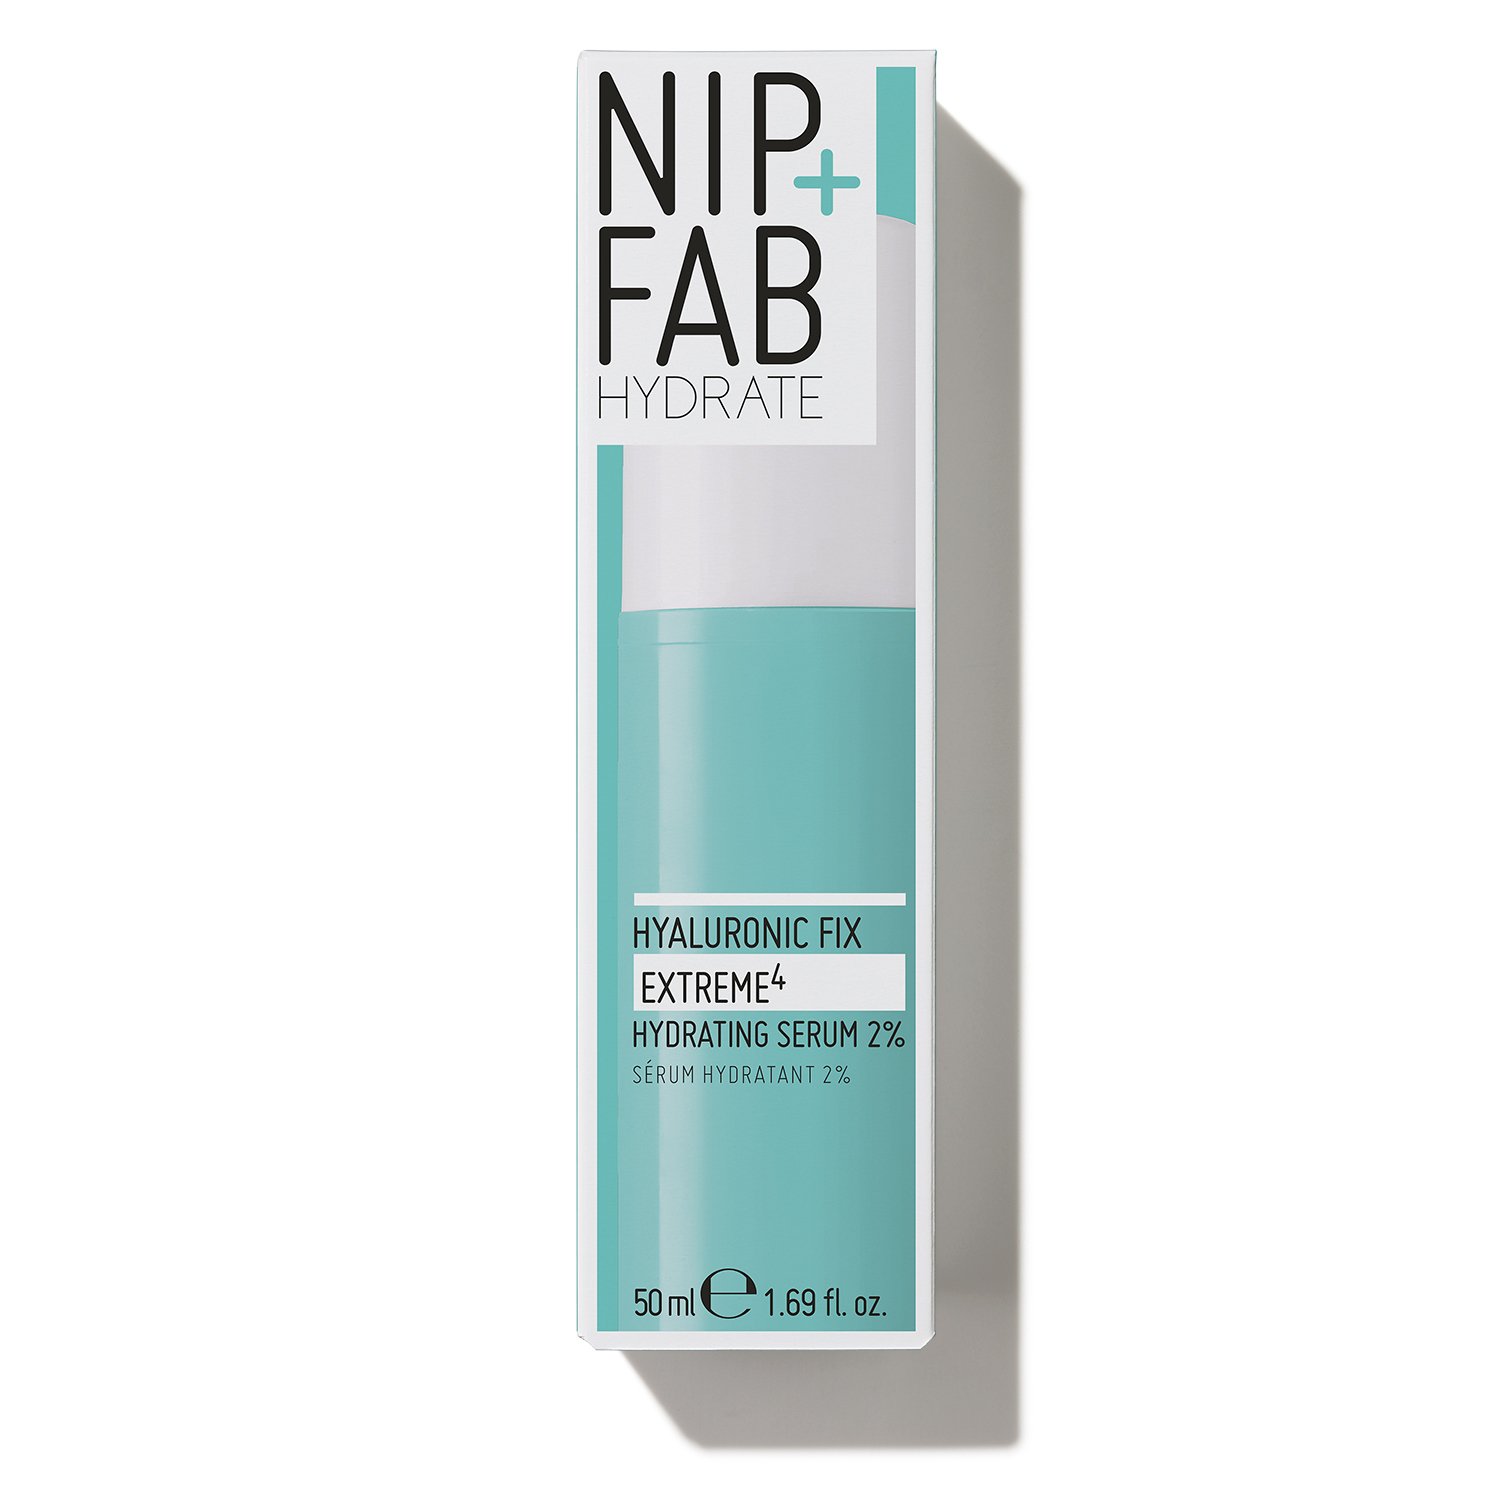 NIP+FAB Hyaluronic Fix Extreme4 Fix Serum 50 ml